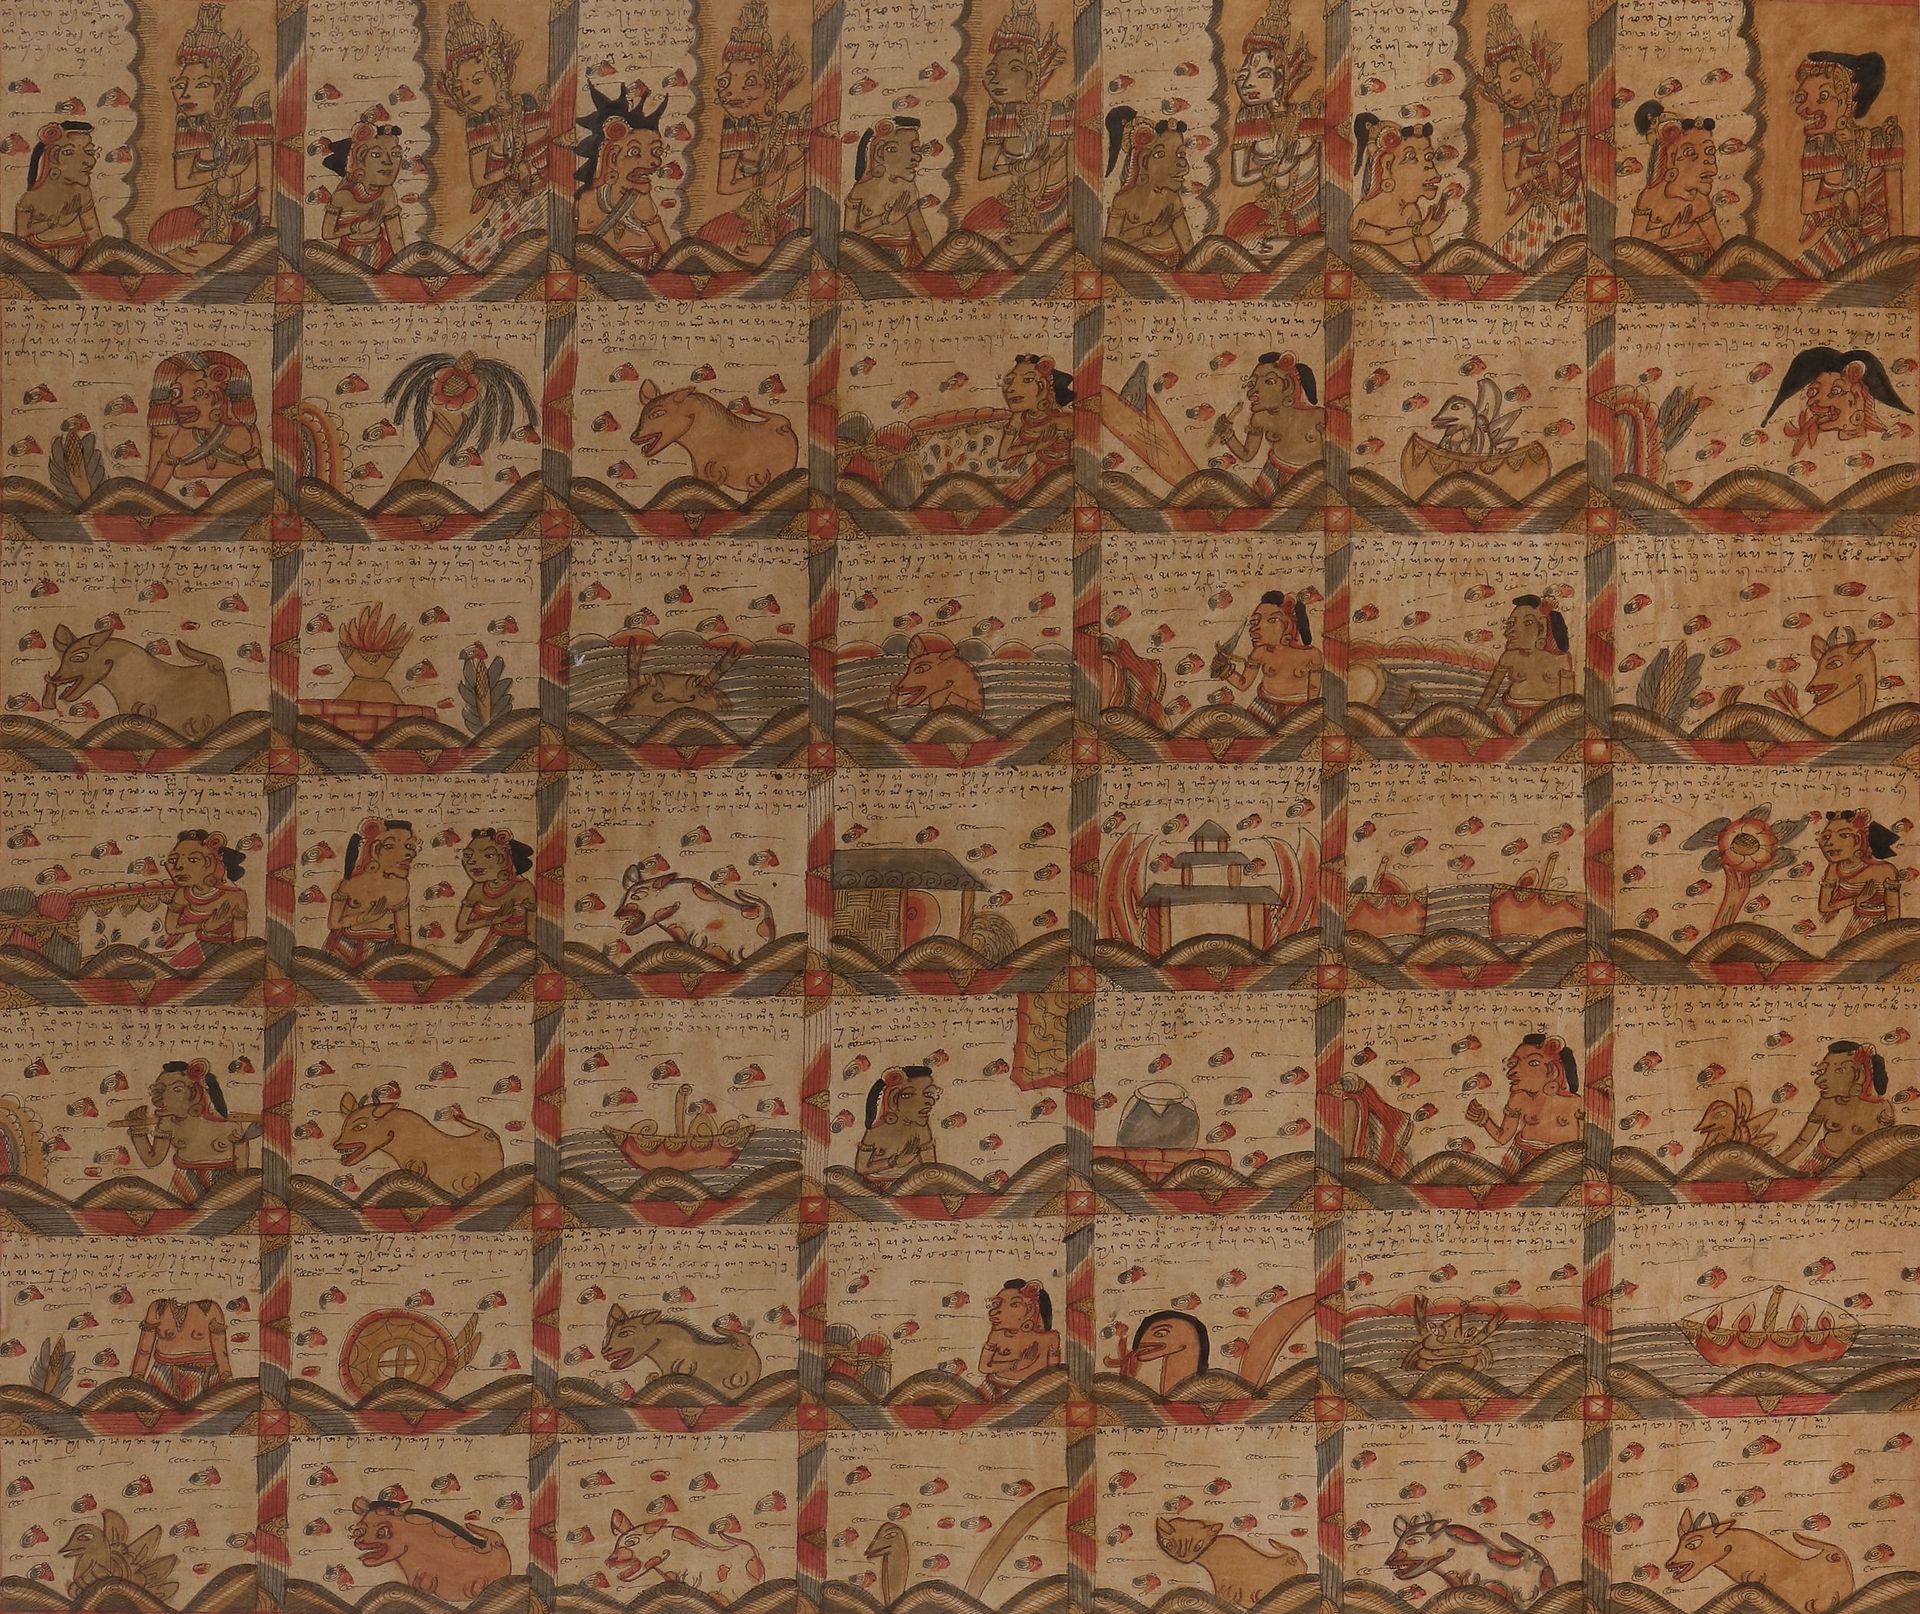 Null Palelintangan (astrological calendar), Bali, 20th centuryPainting
on textil&hellip;